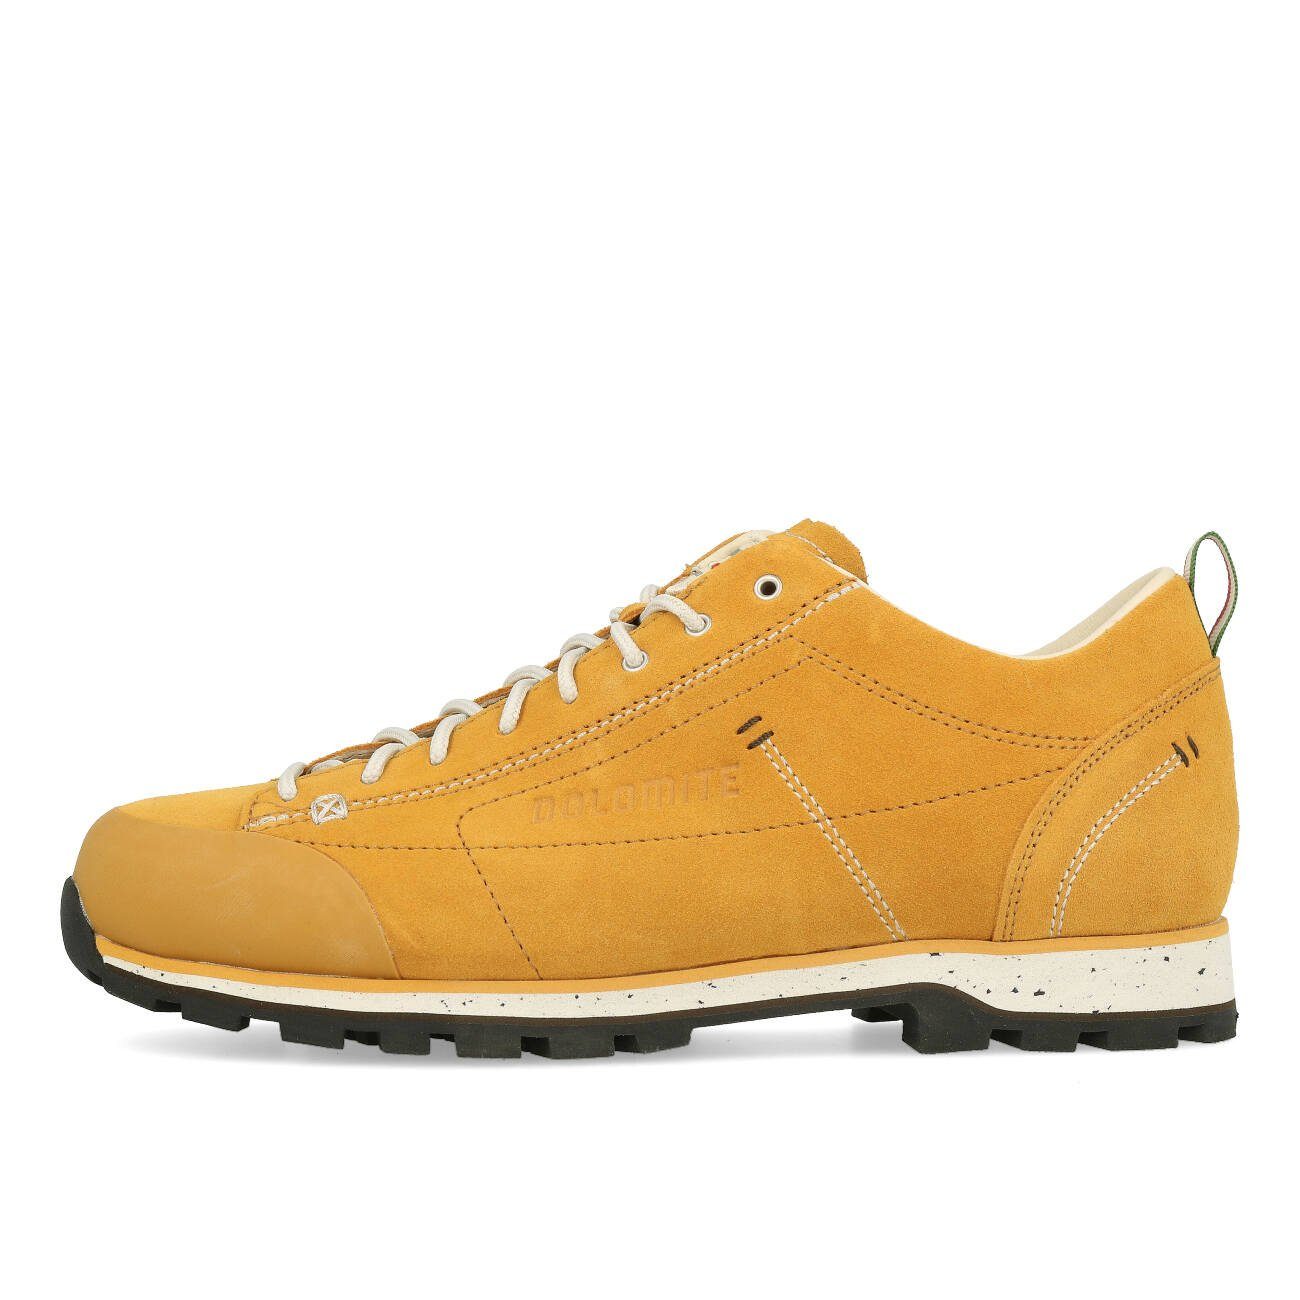 Dolomite Dolomite Cinquantaquattro Shoe M's 54 Low Evo Herren Spice Yellow Outdoorschuh gelb